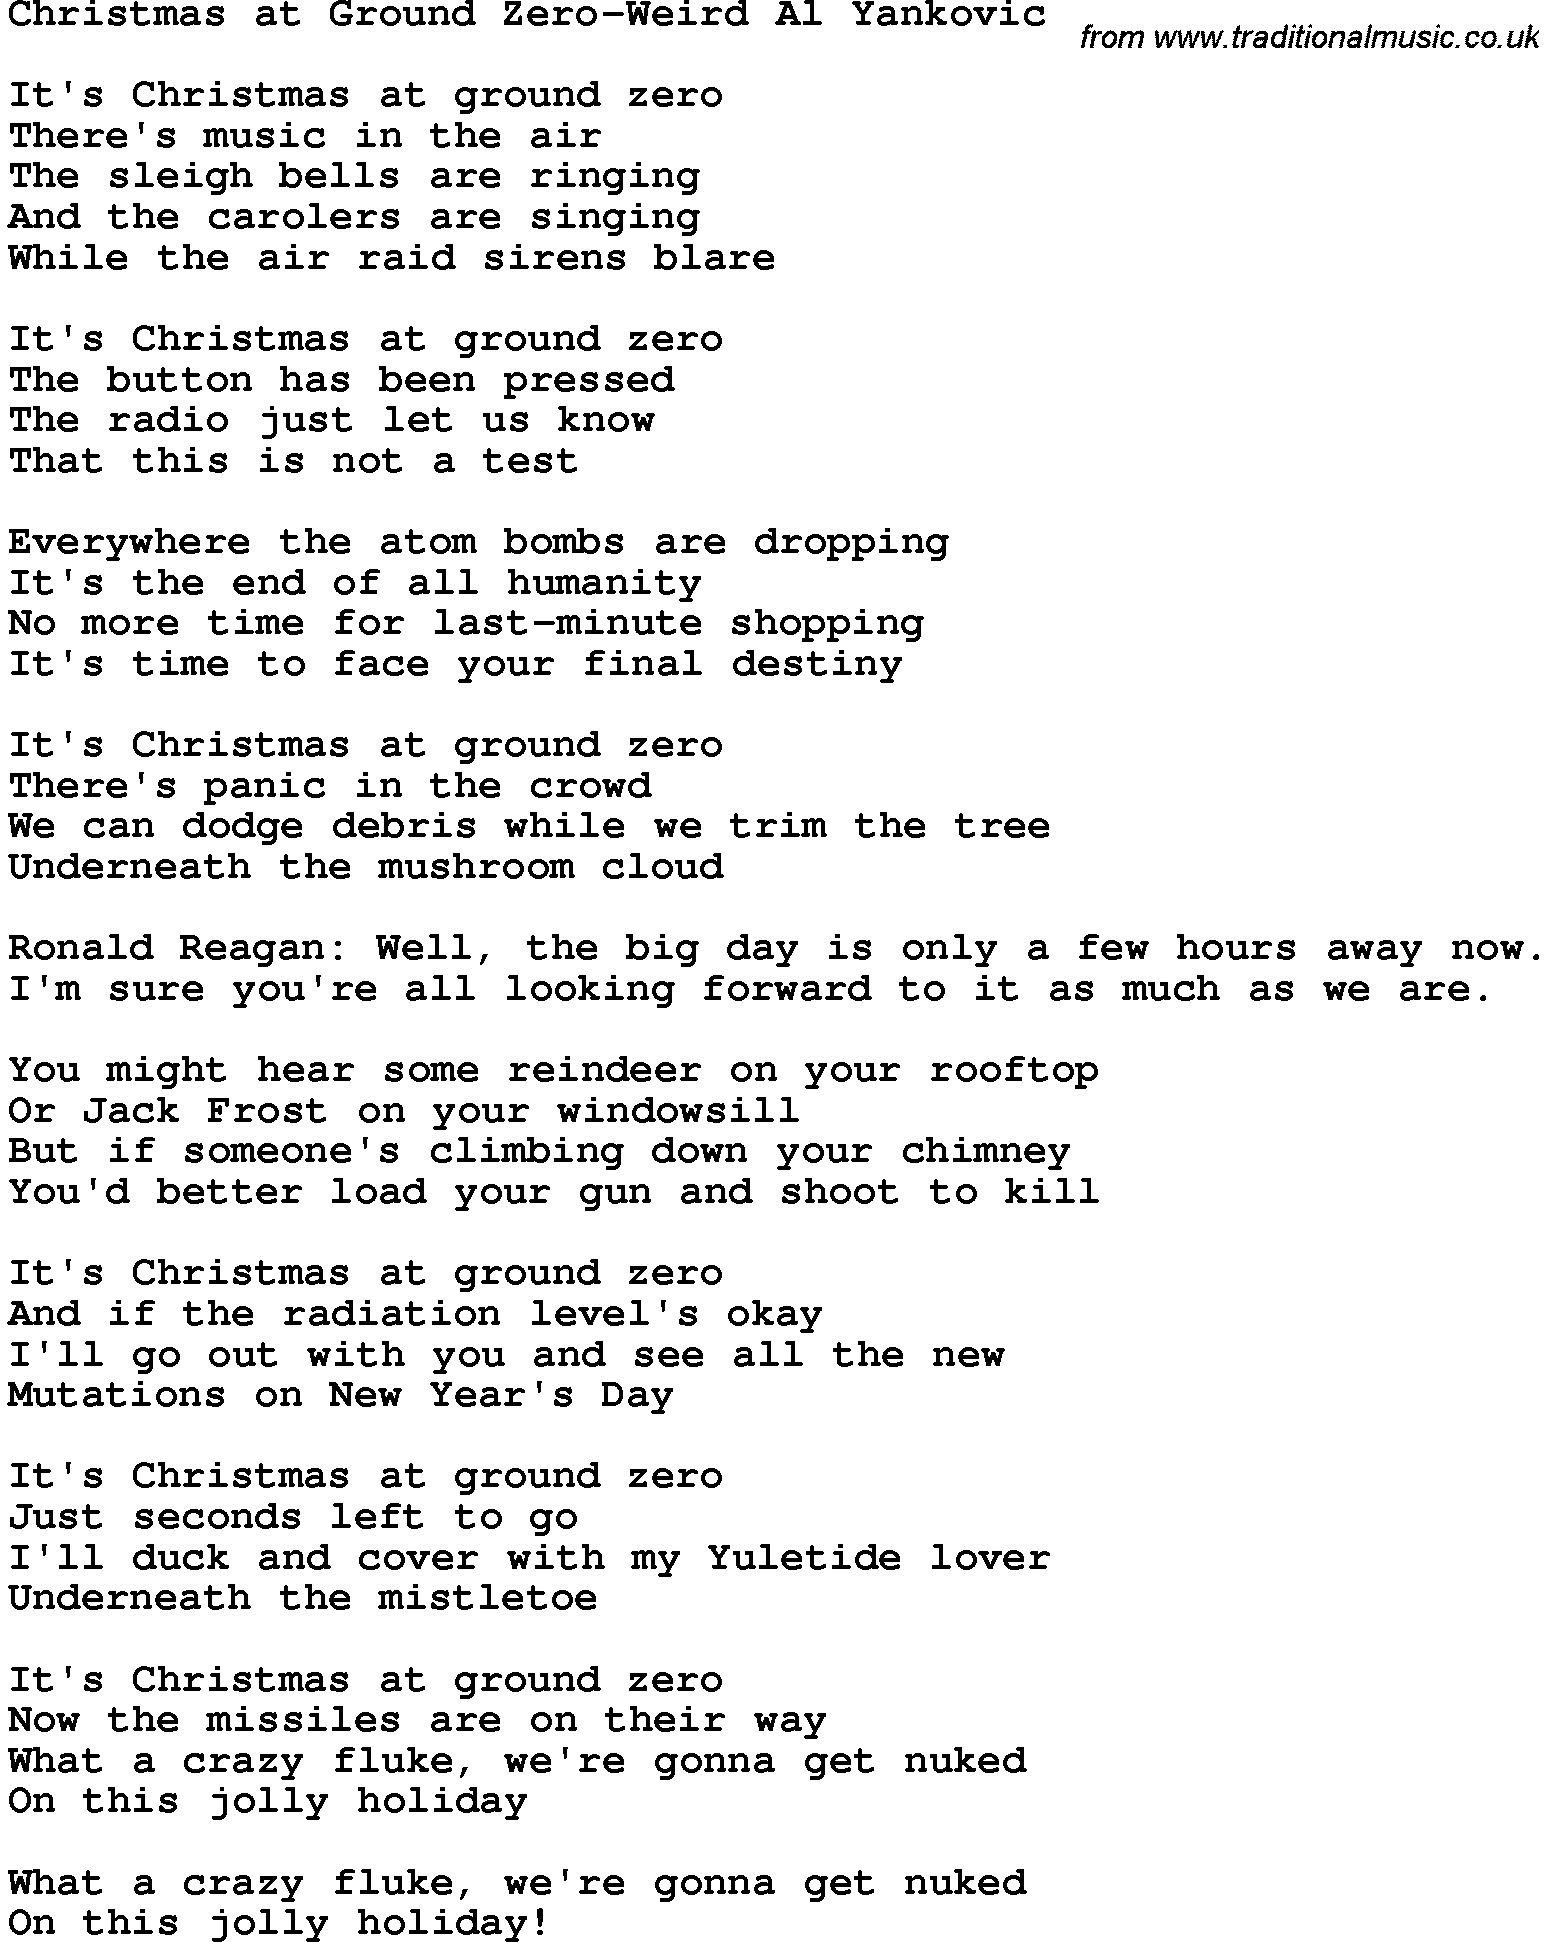 Novelty song: Christmas At Ground Zero-Weird Al Yankovic lyrics